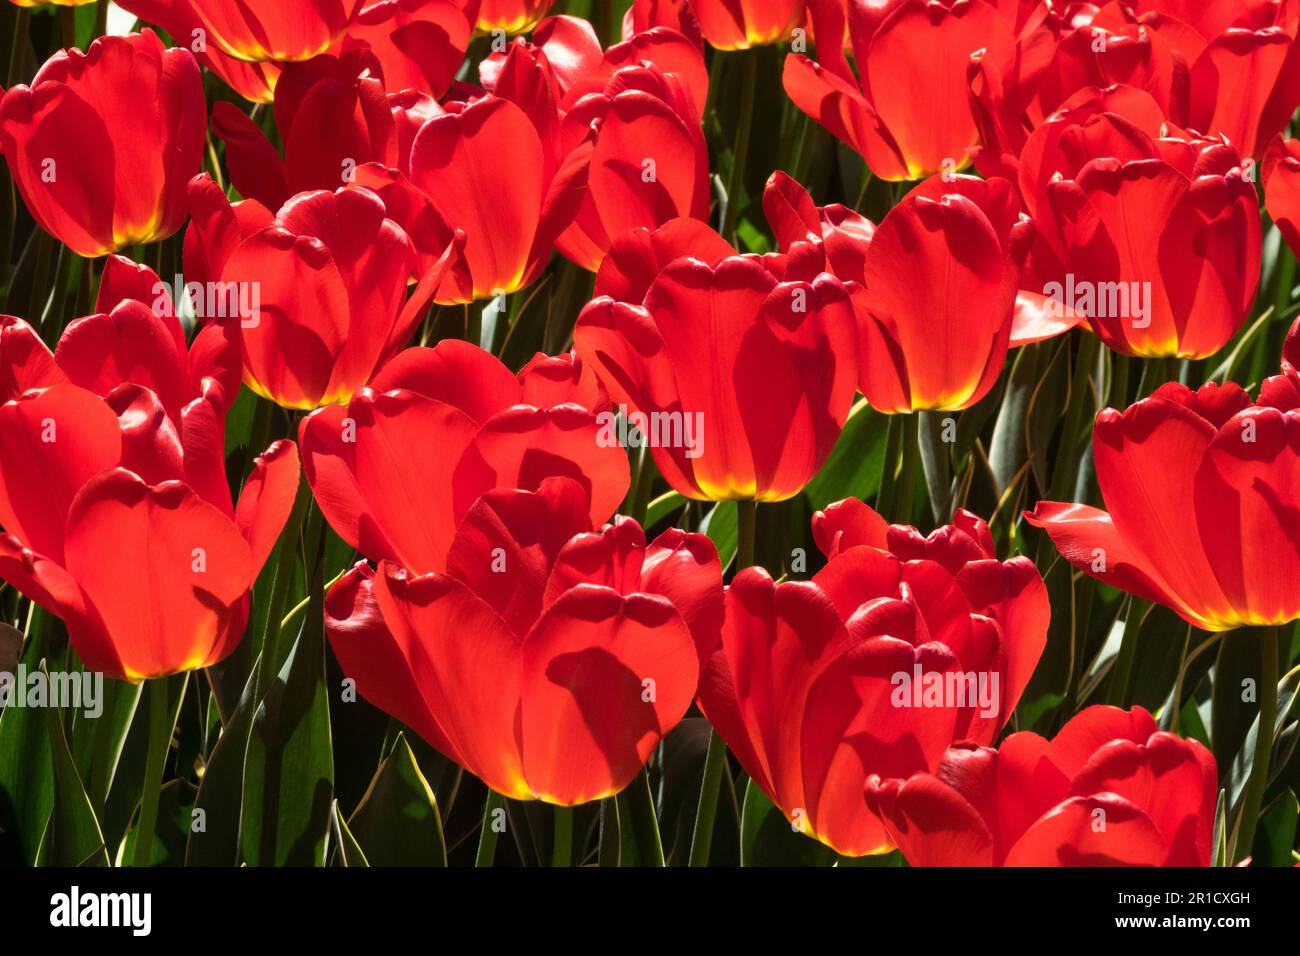 Darwin hybrid, Red Tulips 'Parade Design' Stock Photo